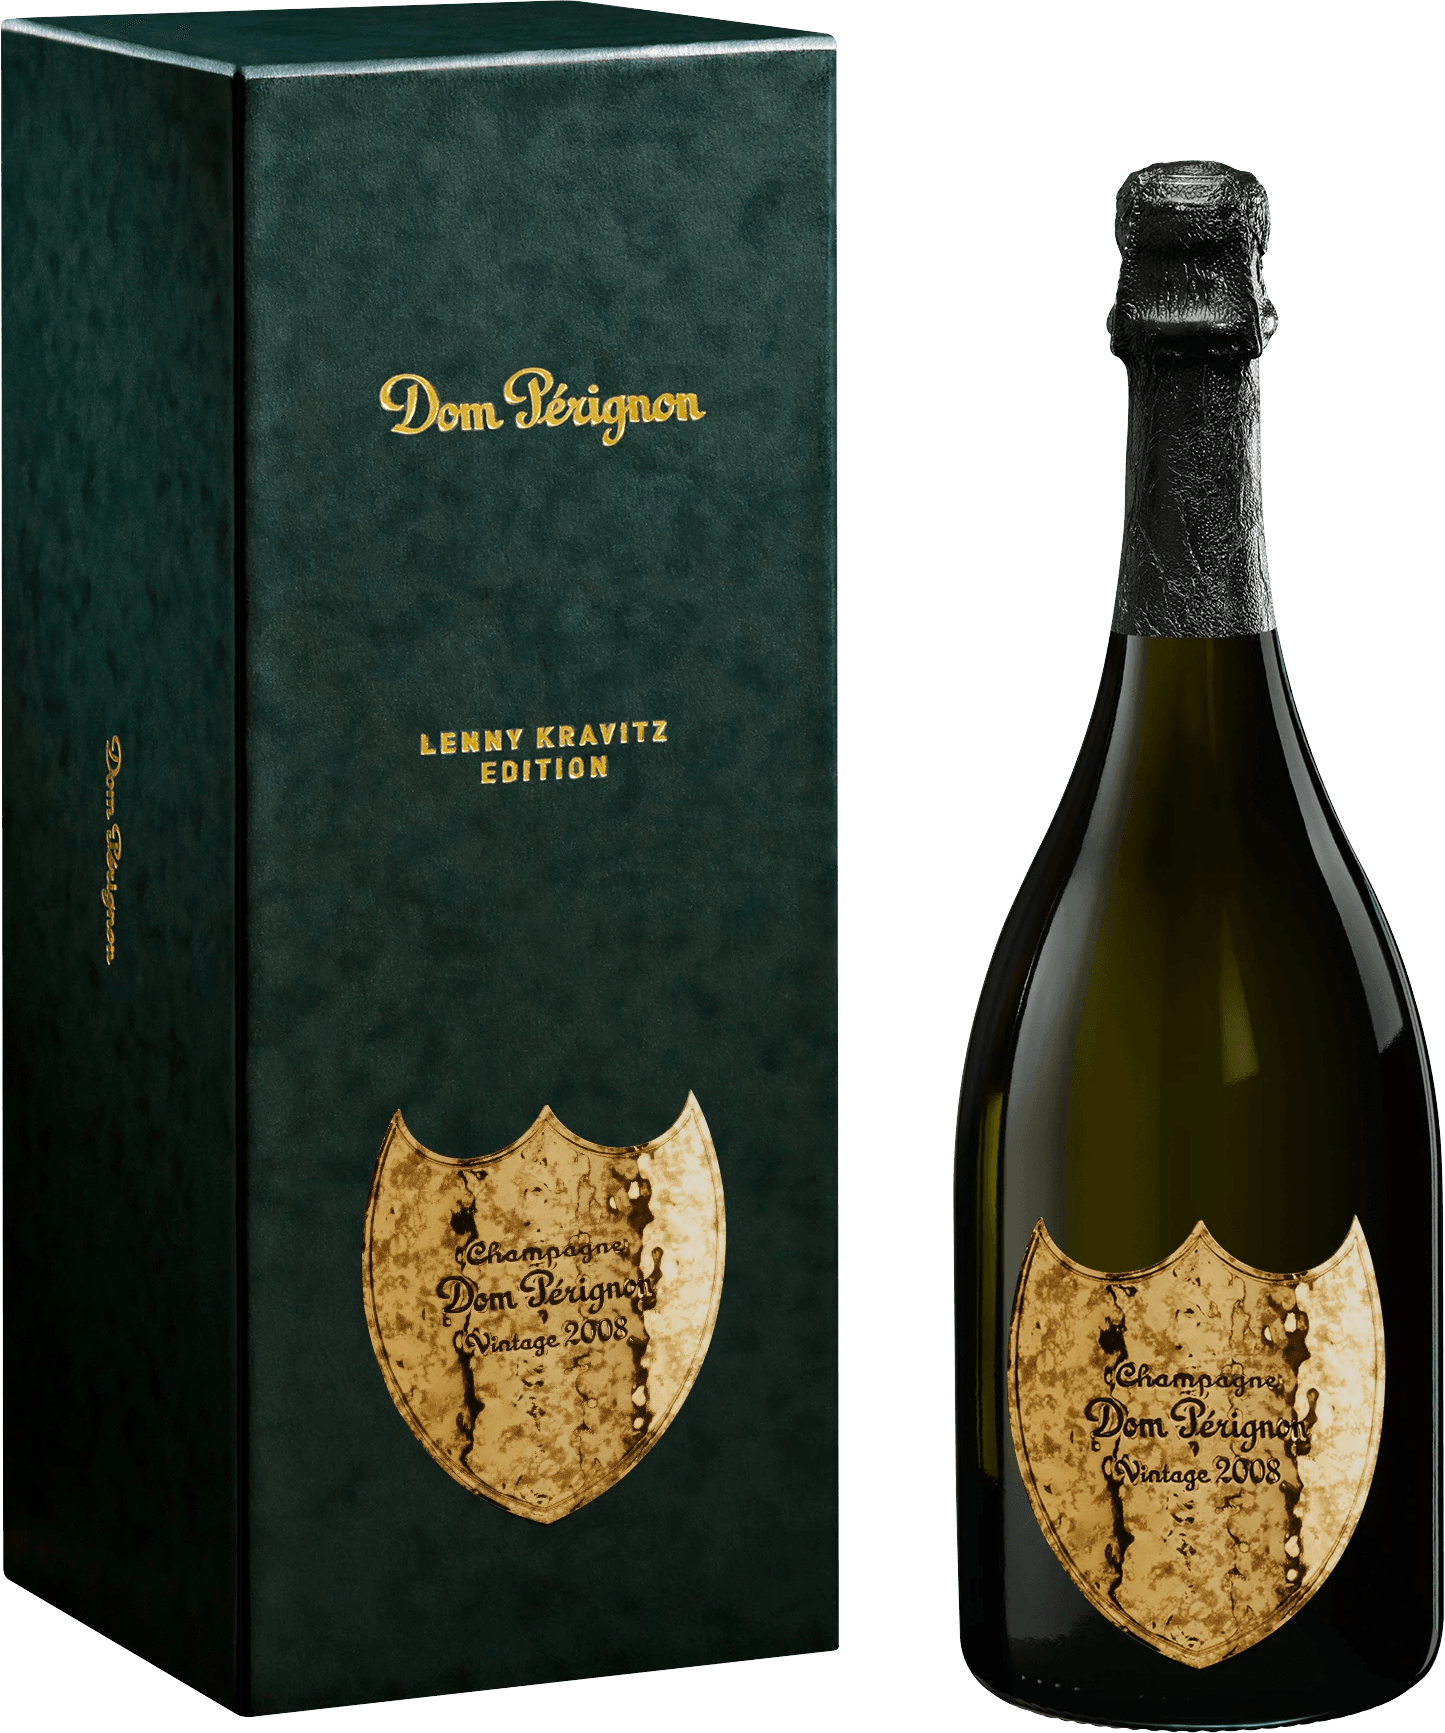 Dom prignon edition limited lenny kravitz 2008  Moet et chandon, Champagne